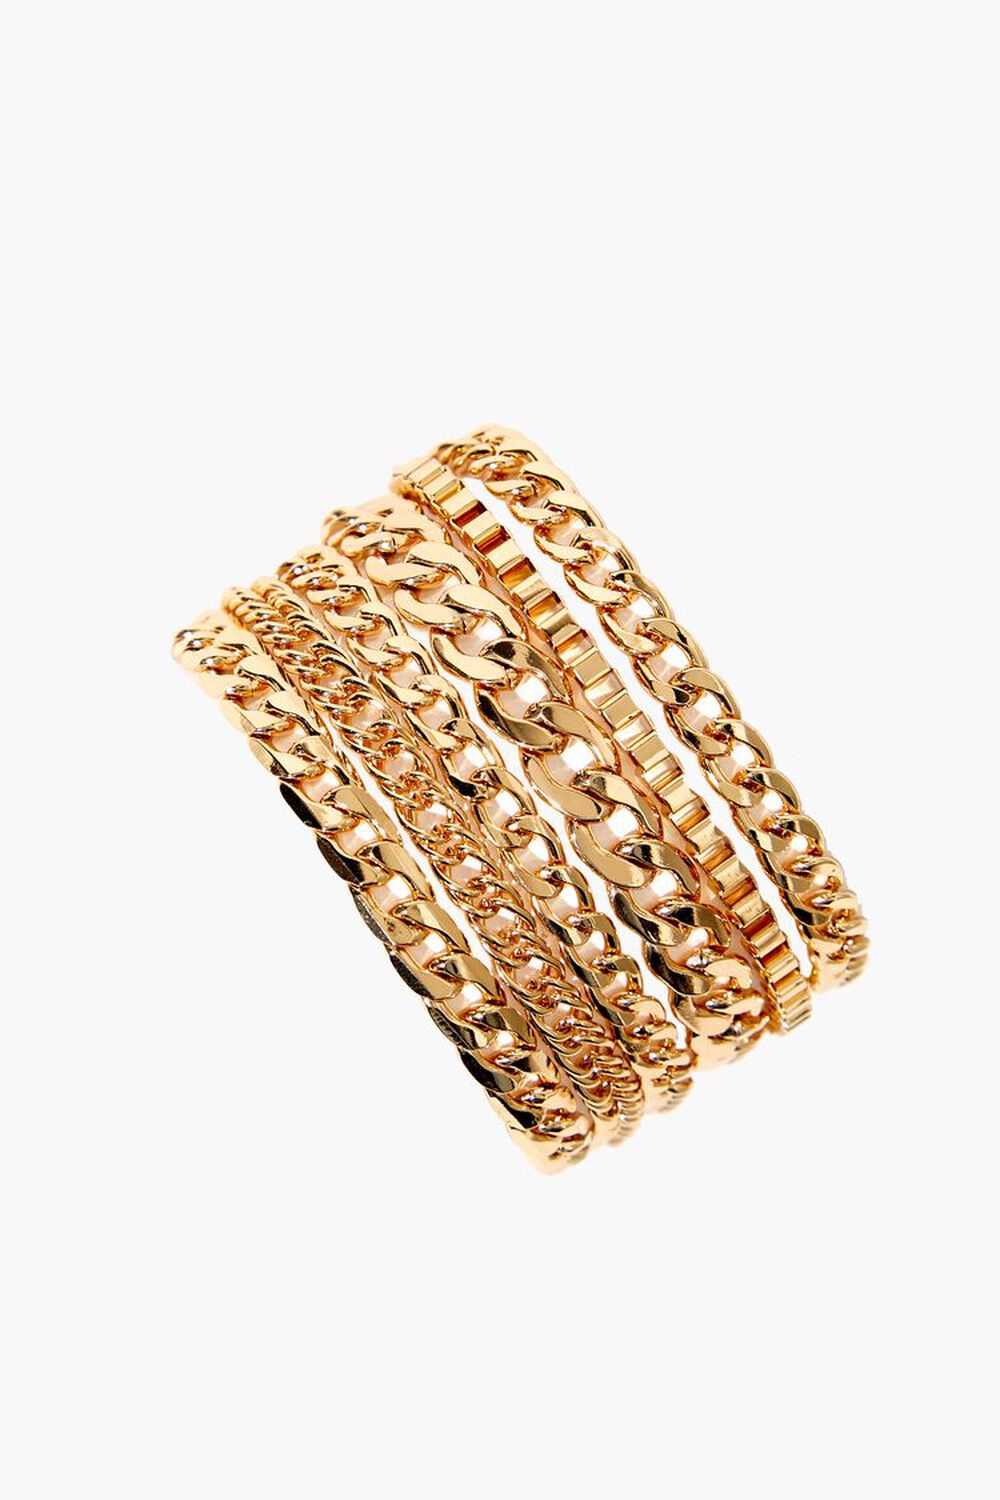 GOLD Chain Layered Bracelet, image 1